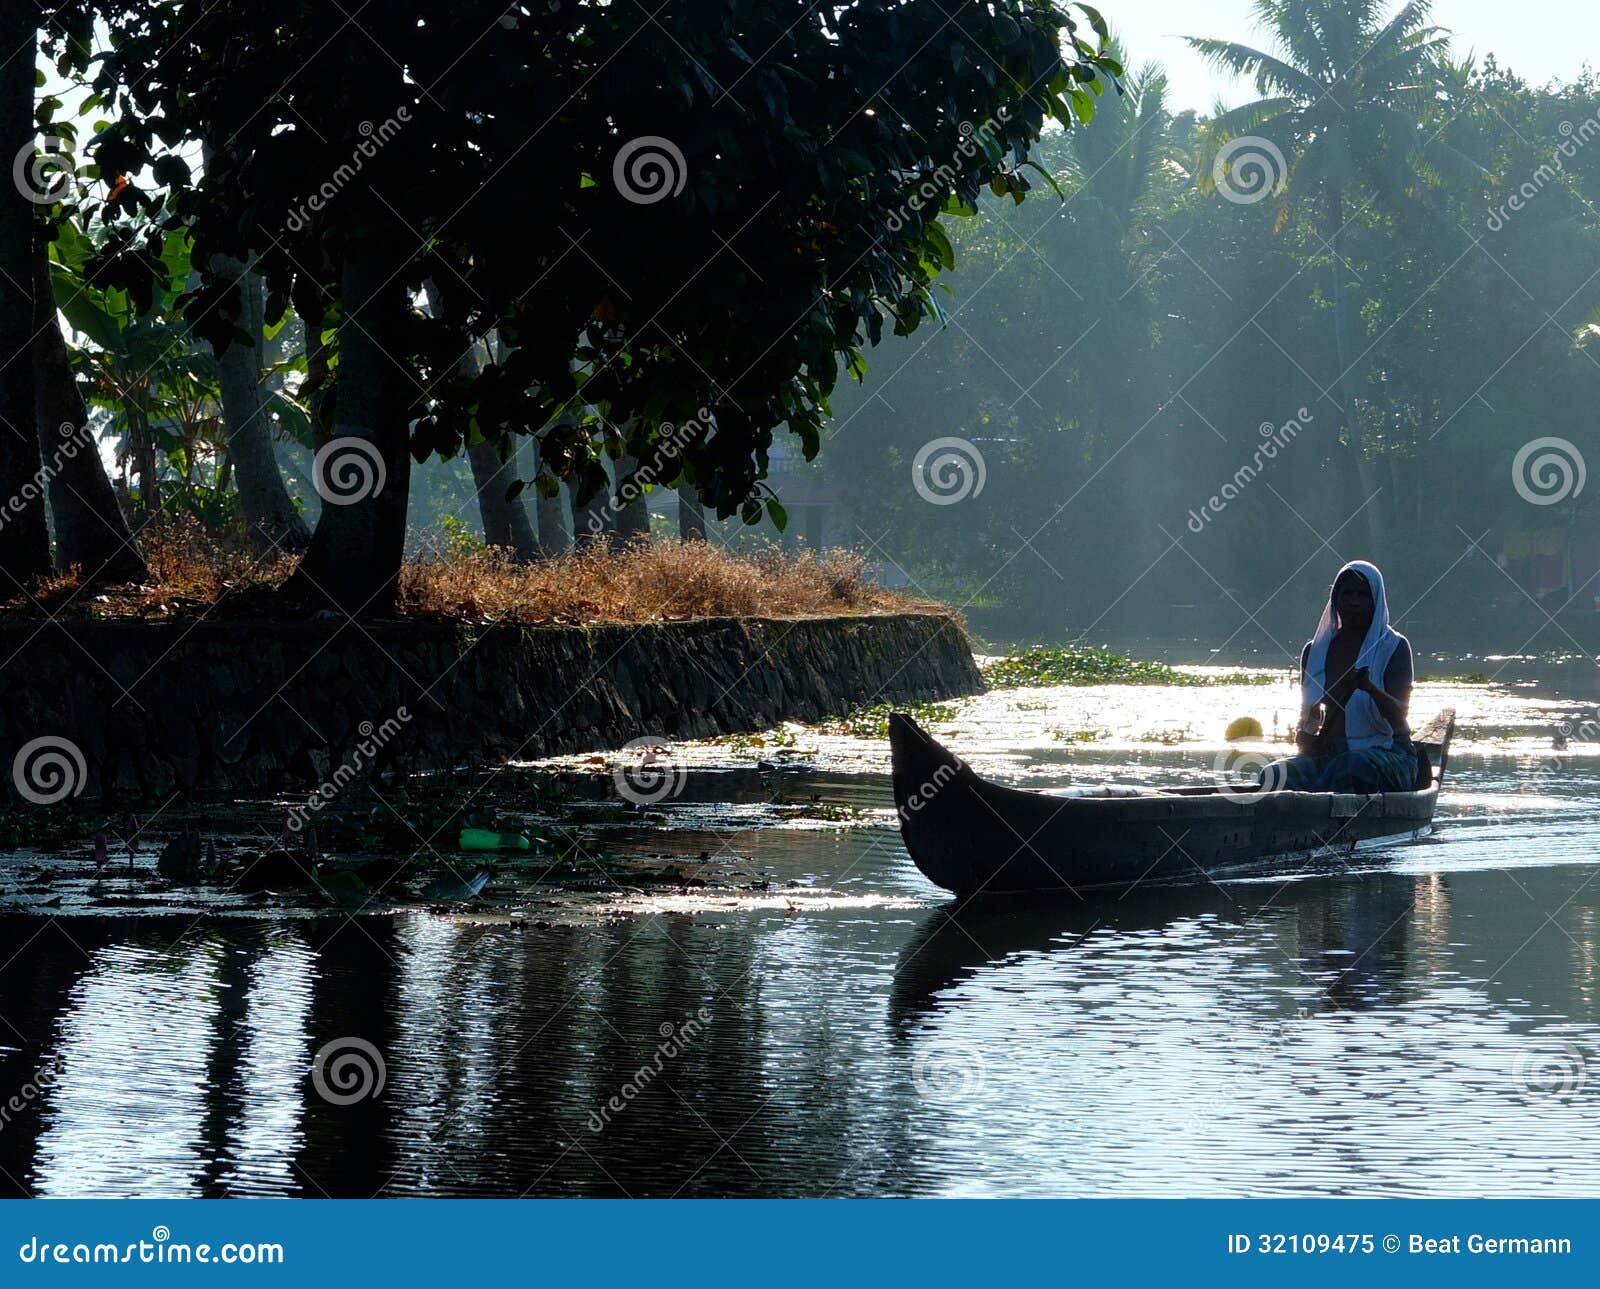 File:Kerala backwaters, Vembanad Lake, Houseboats, India.jpg - Wikipedia